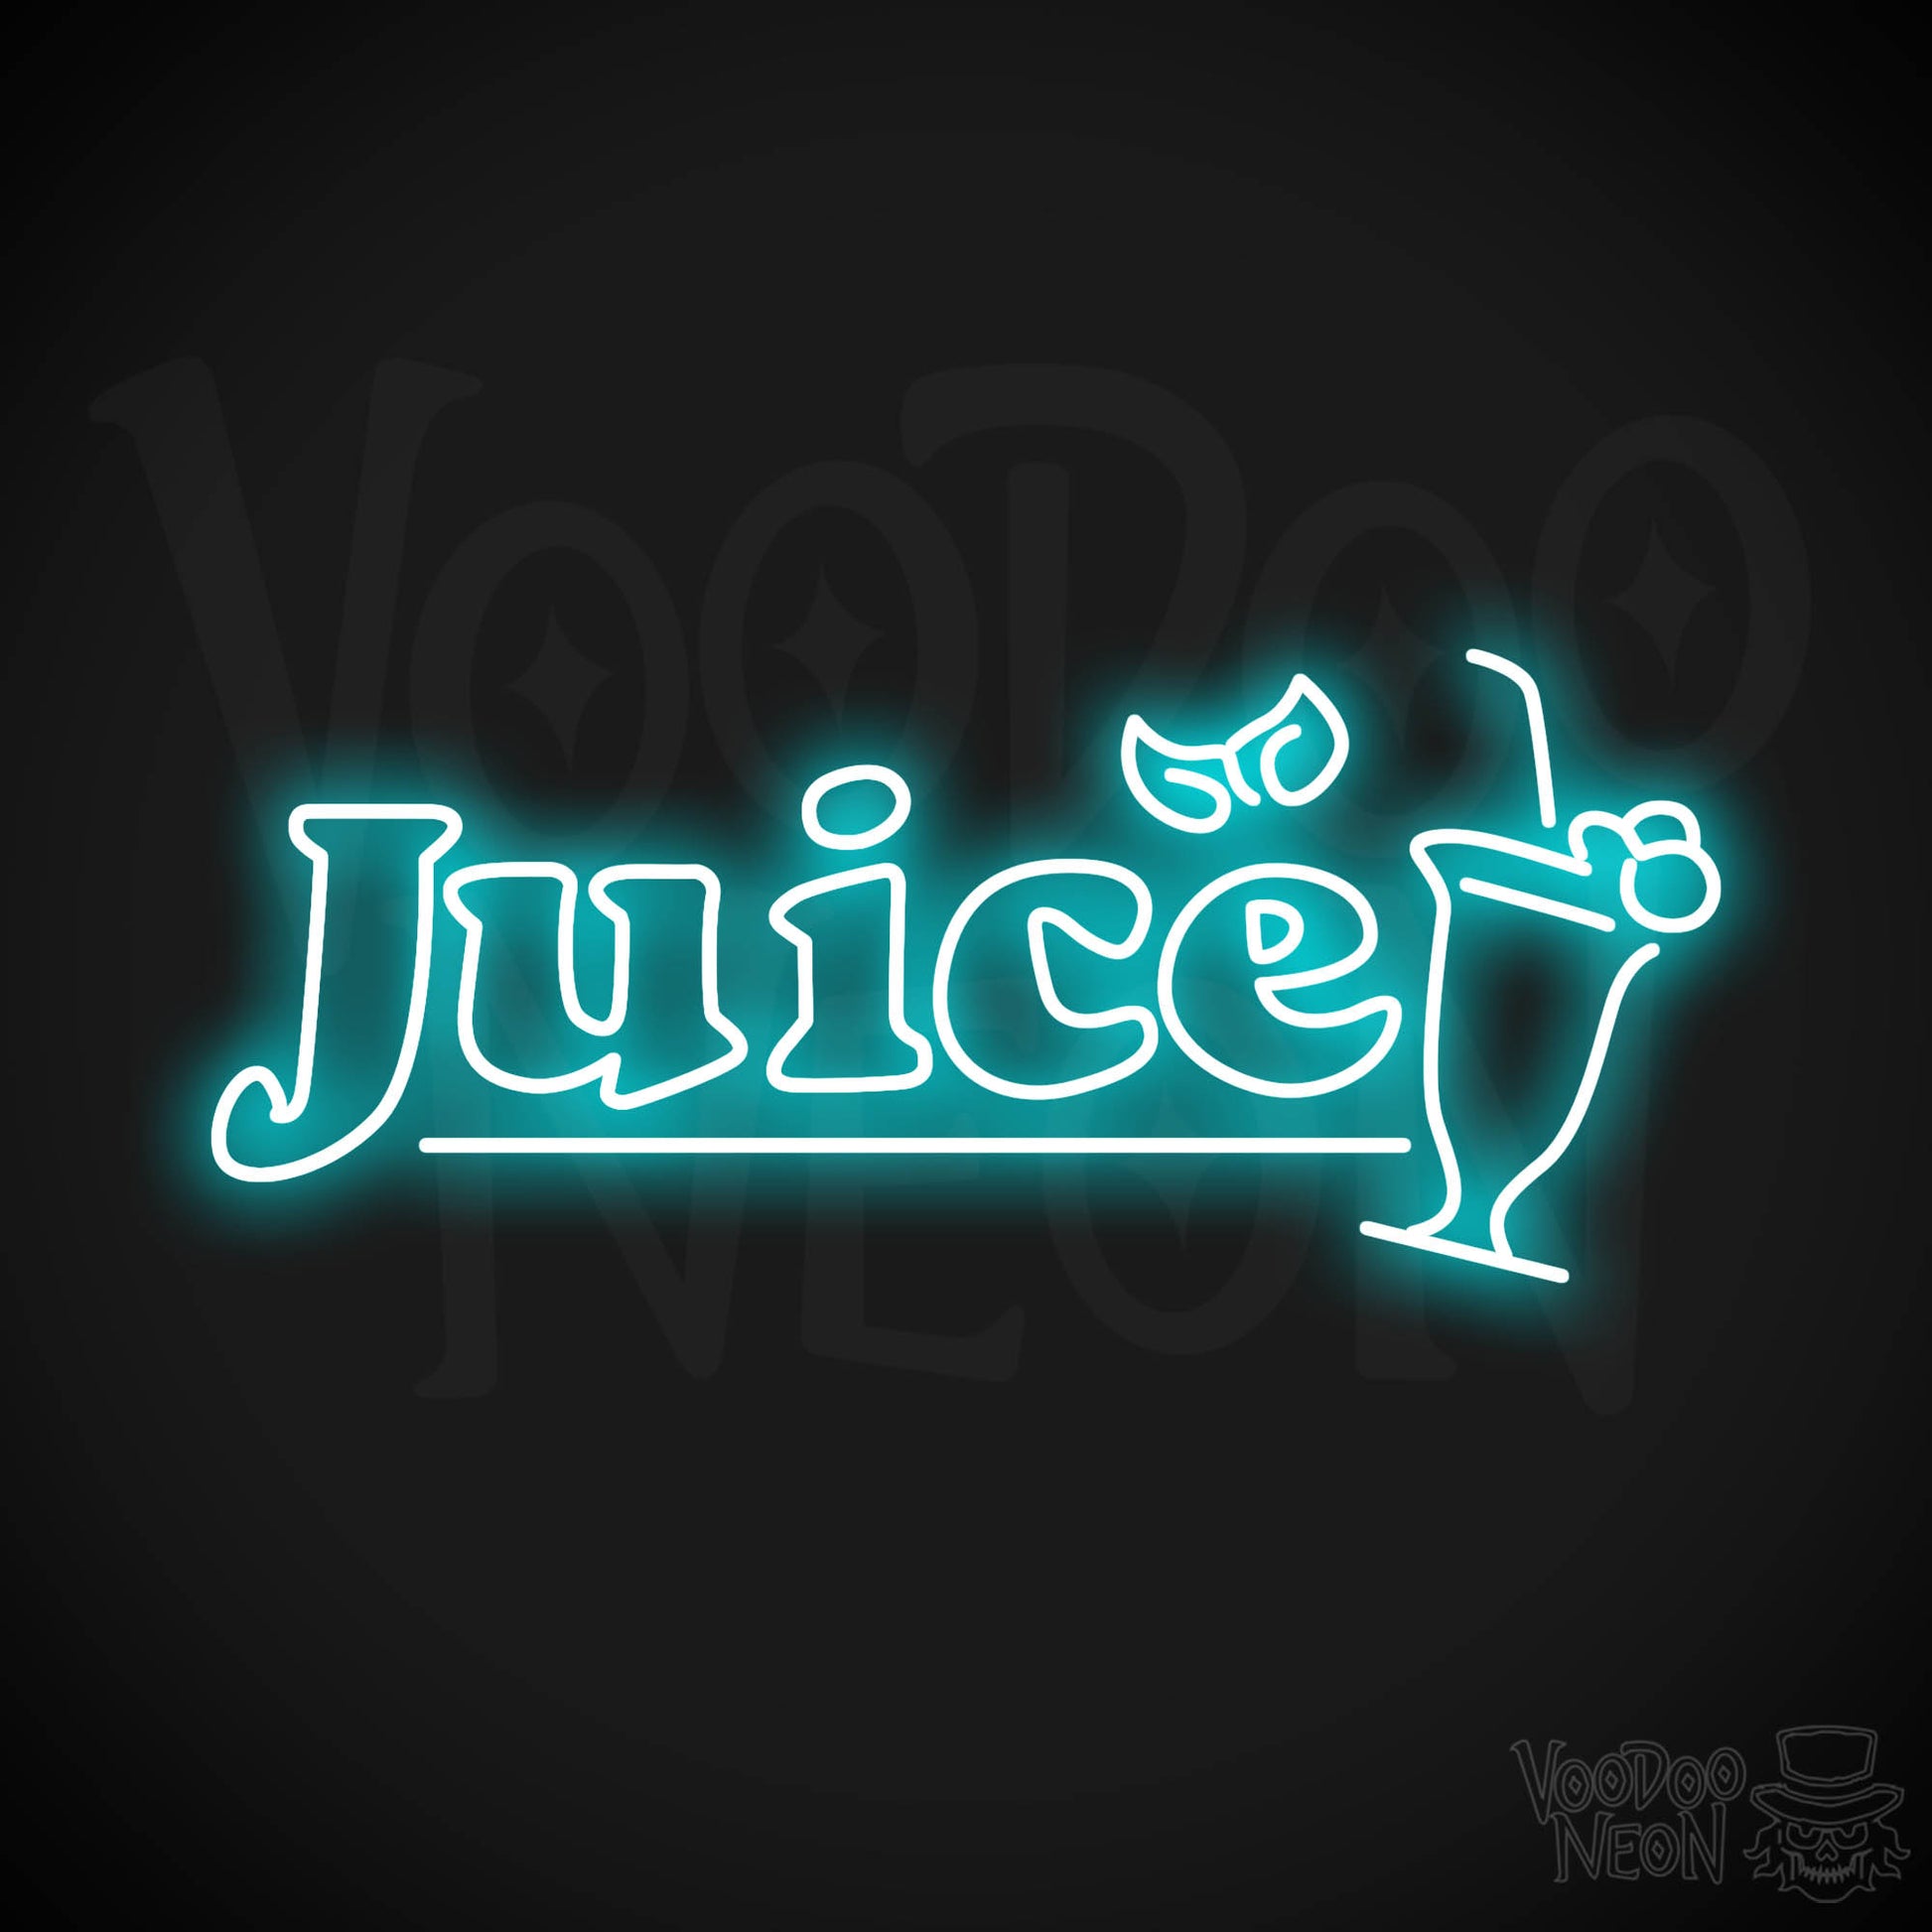 Juice LED Neon - Ice Blue